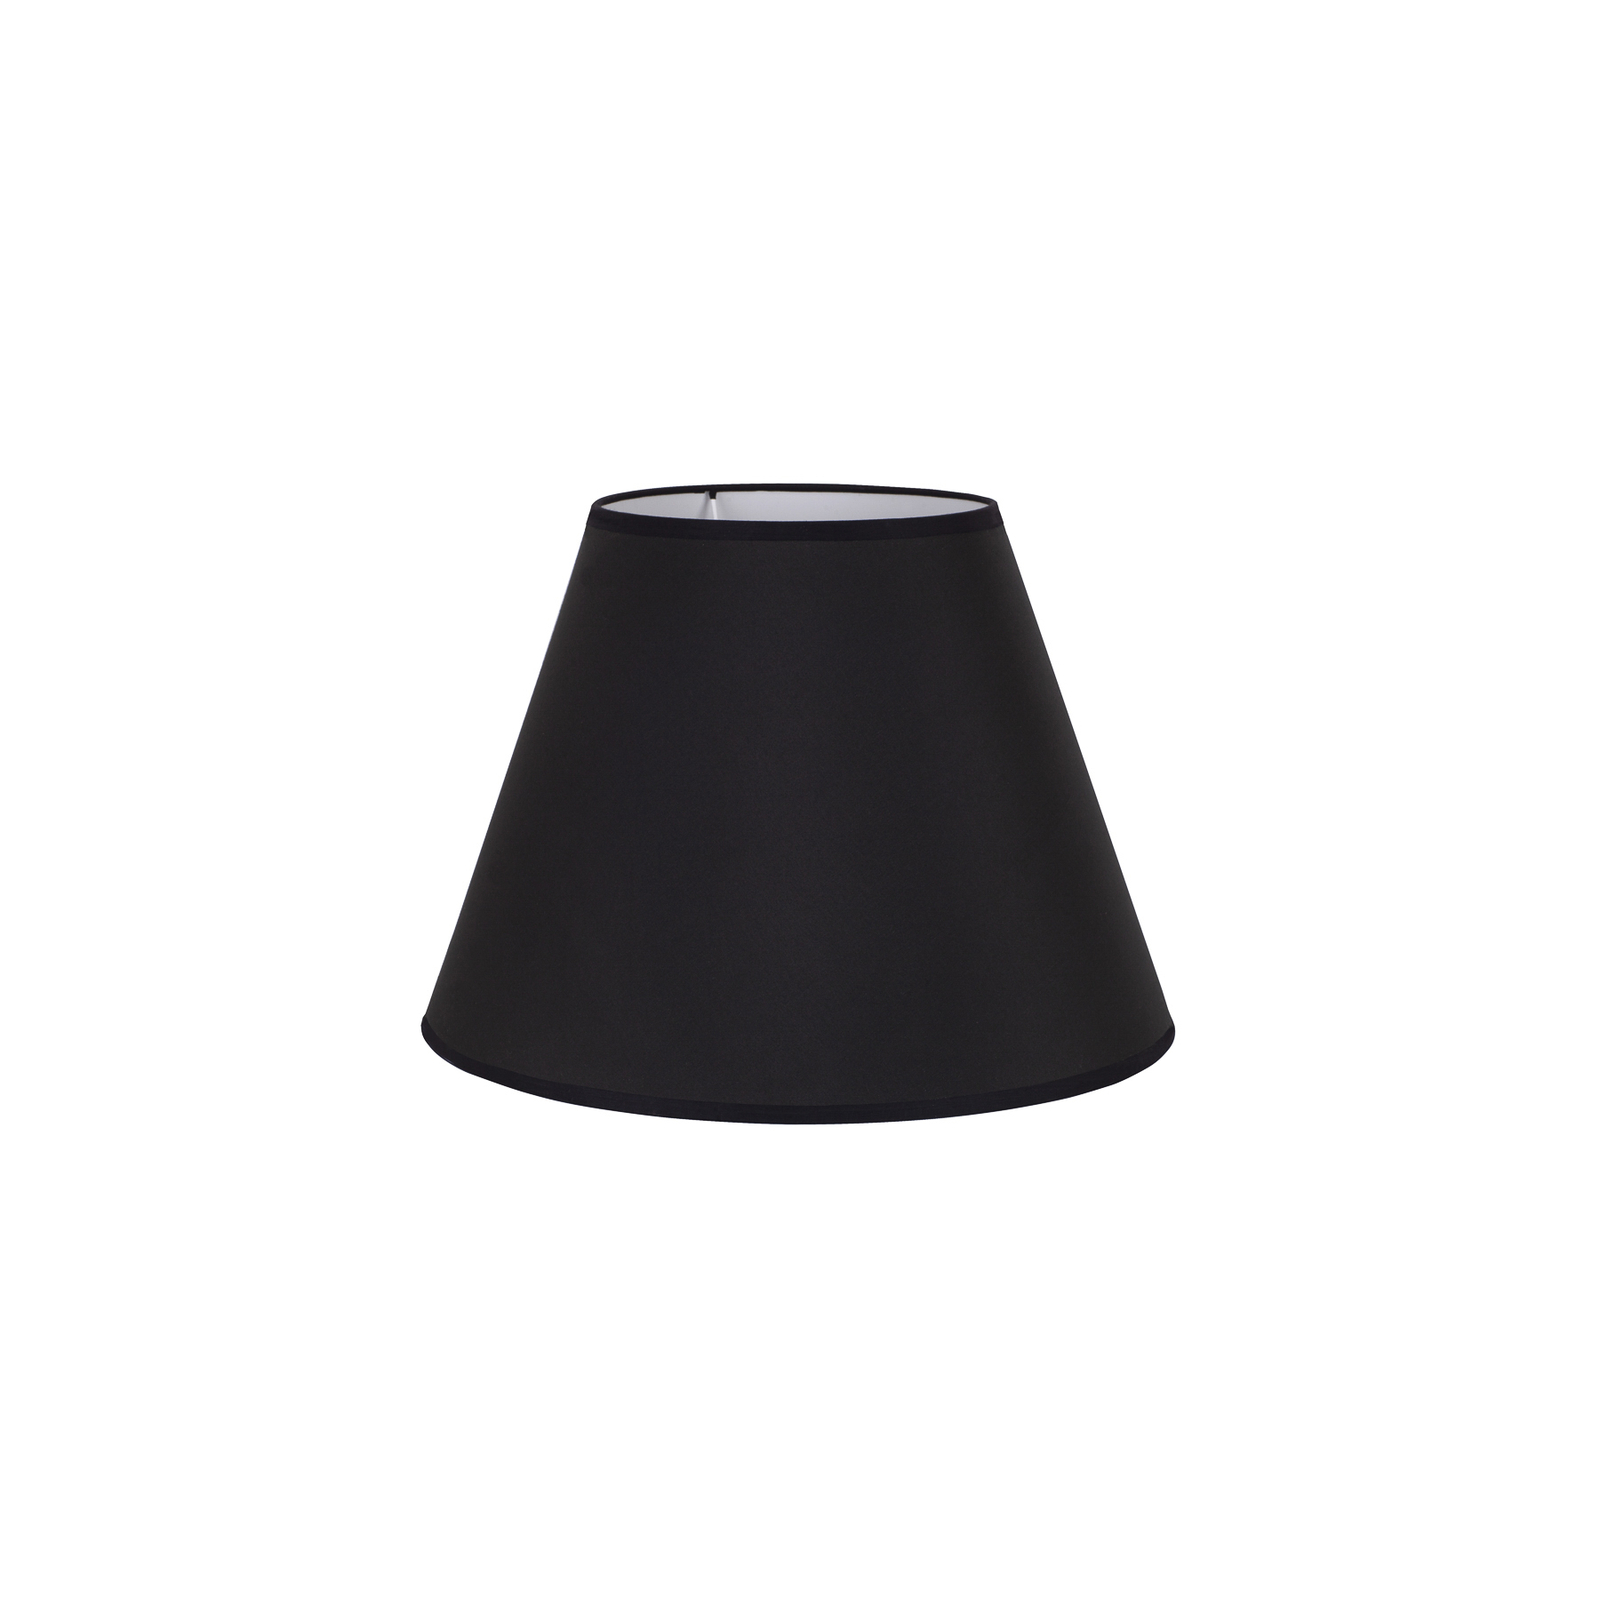 Sofia lámpaernyő 21 cm magas, fekete/fehér